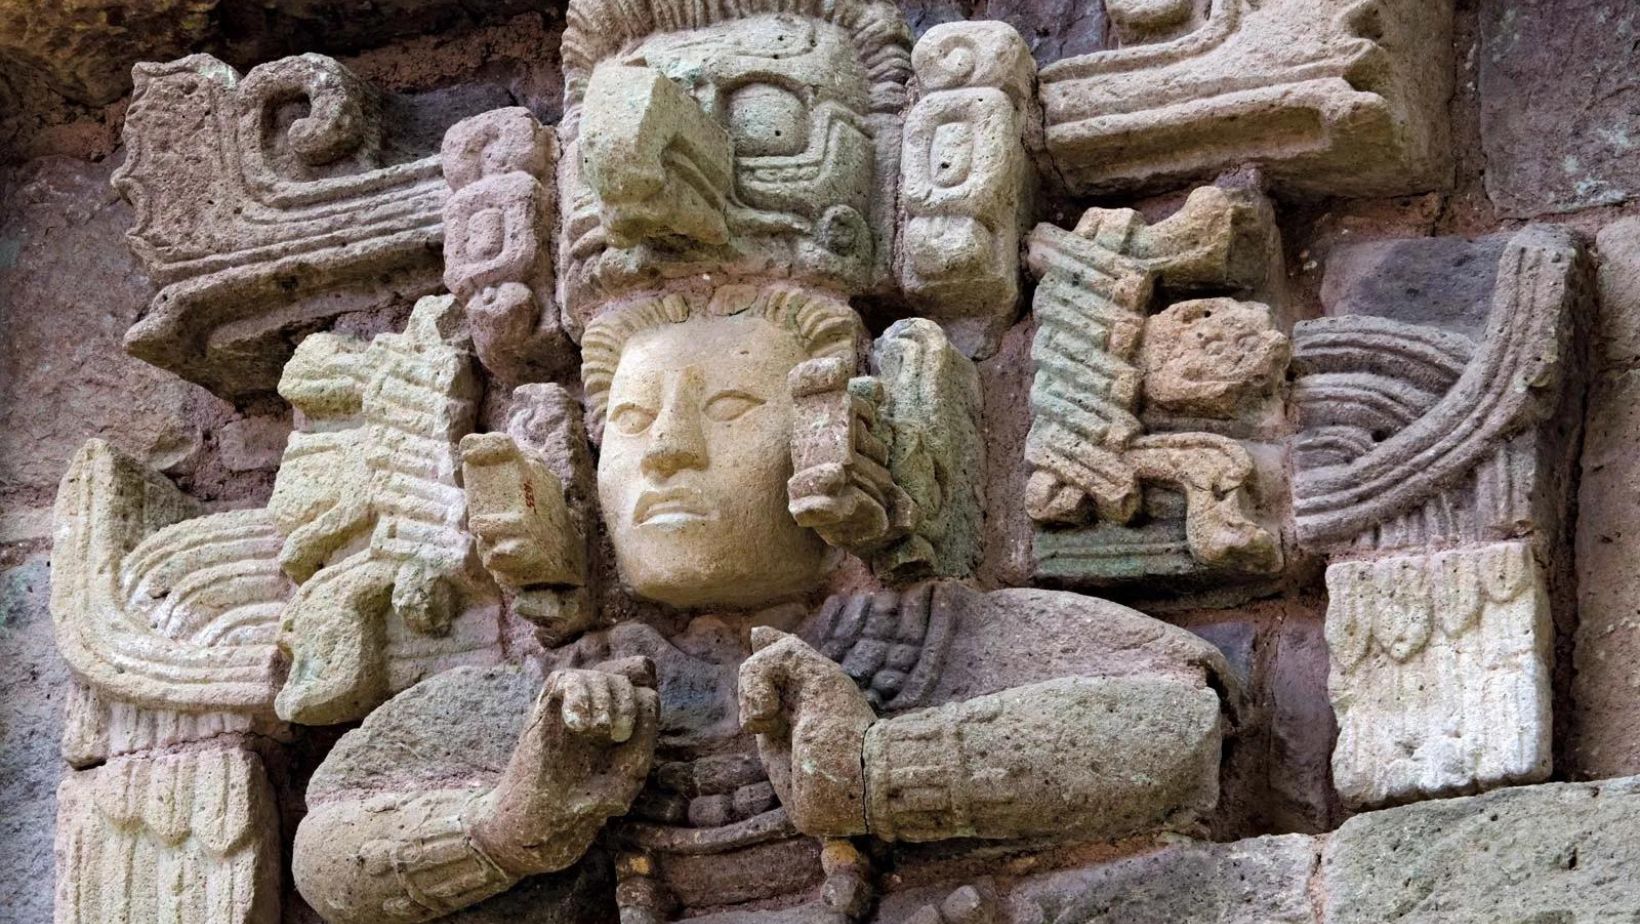 How Did Mayan Rulers Legitimize Their Power